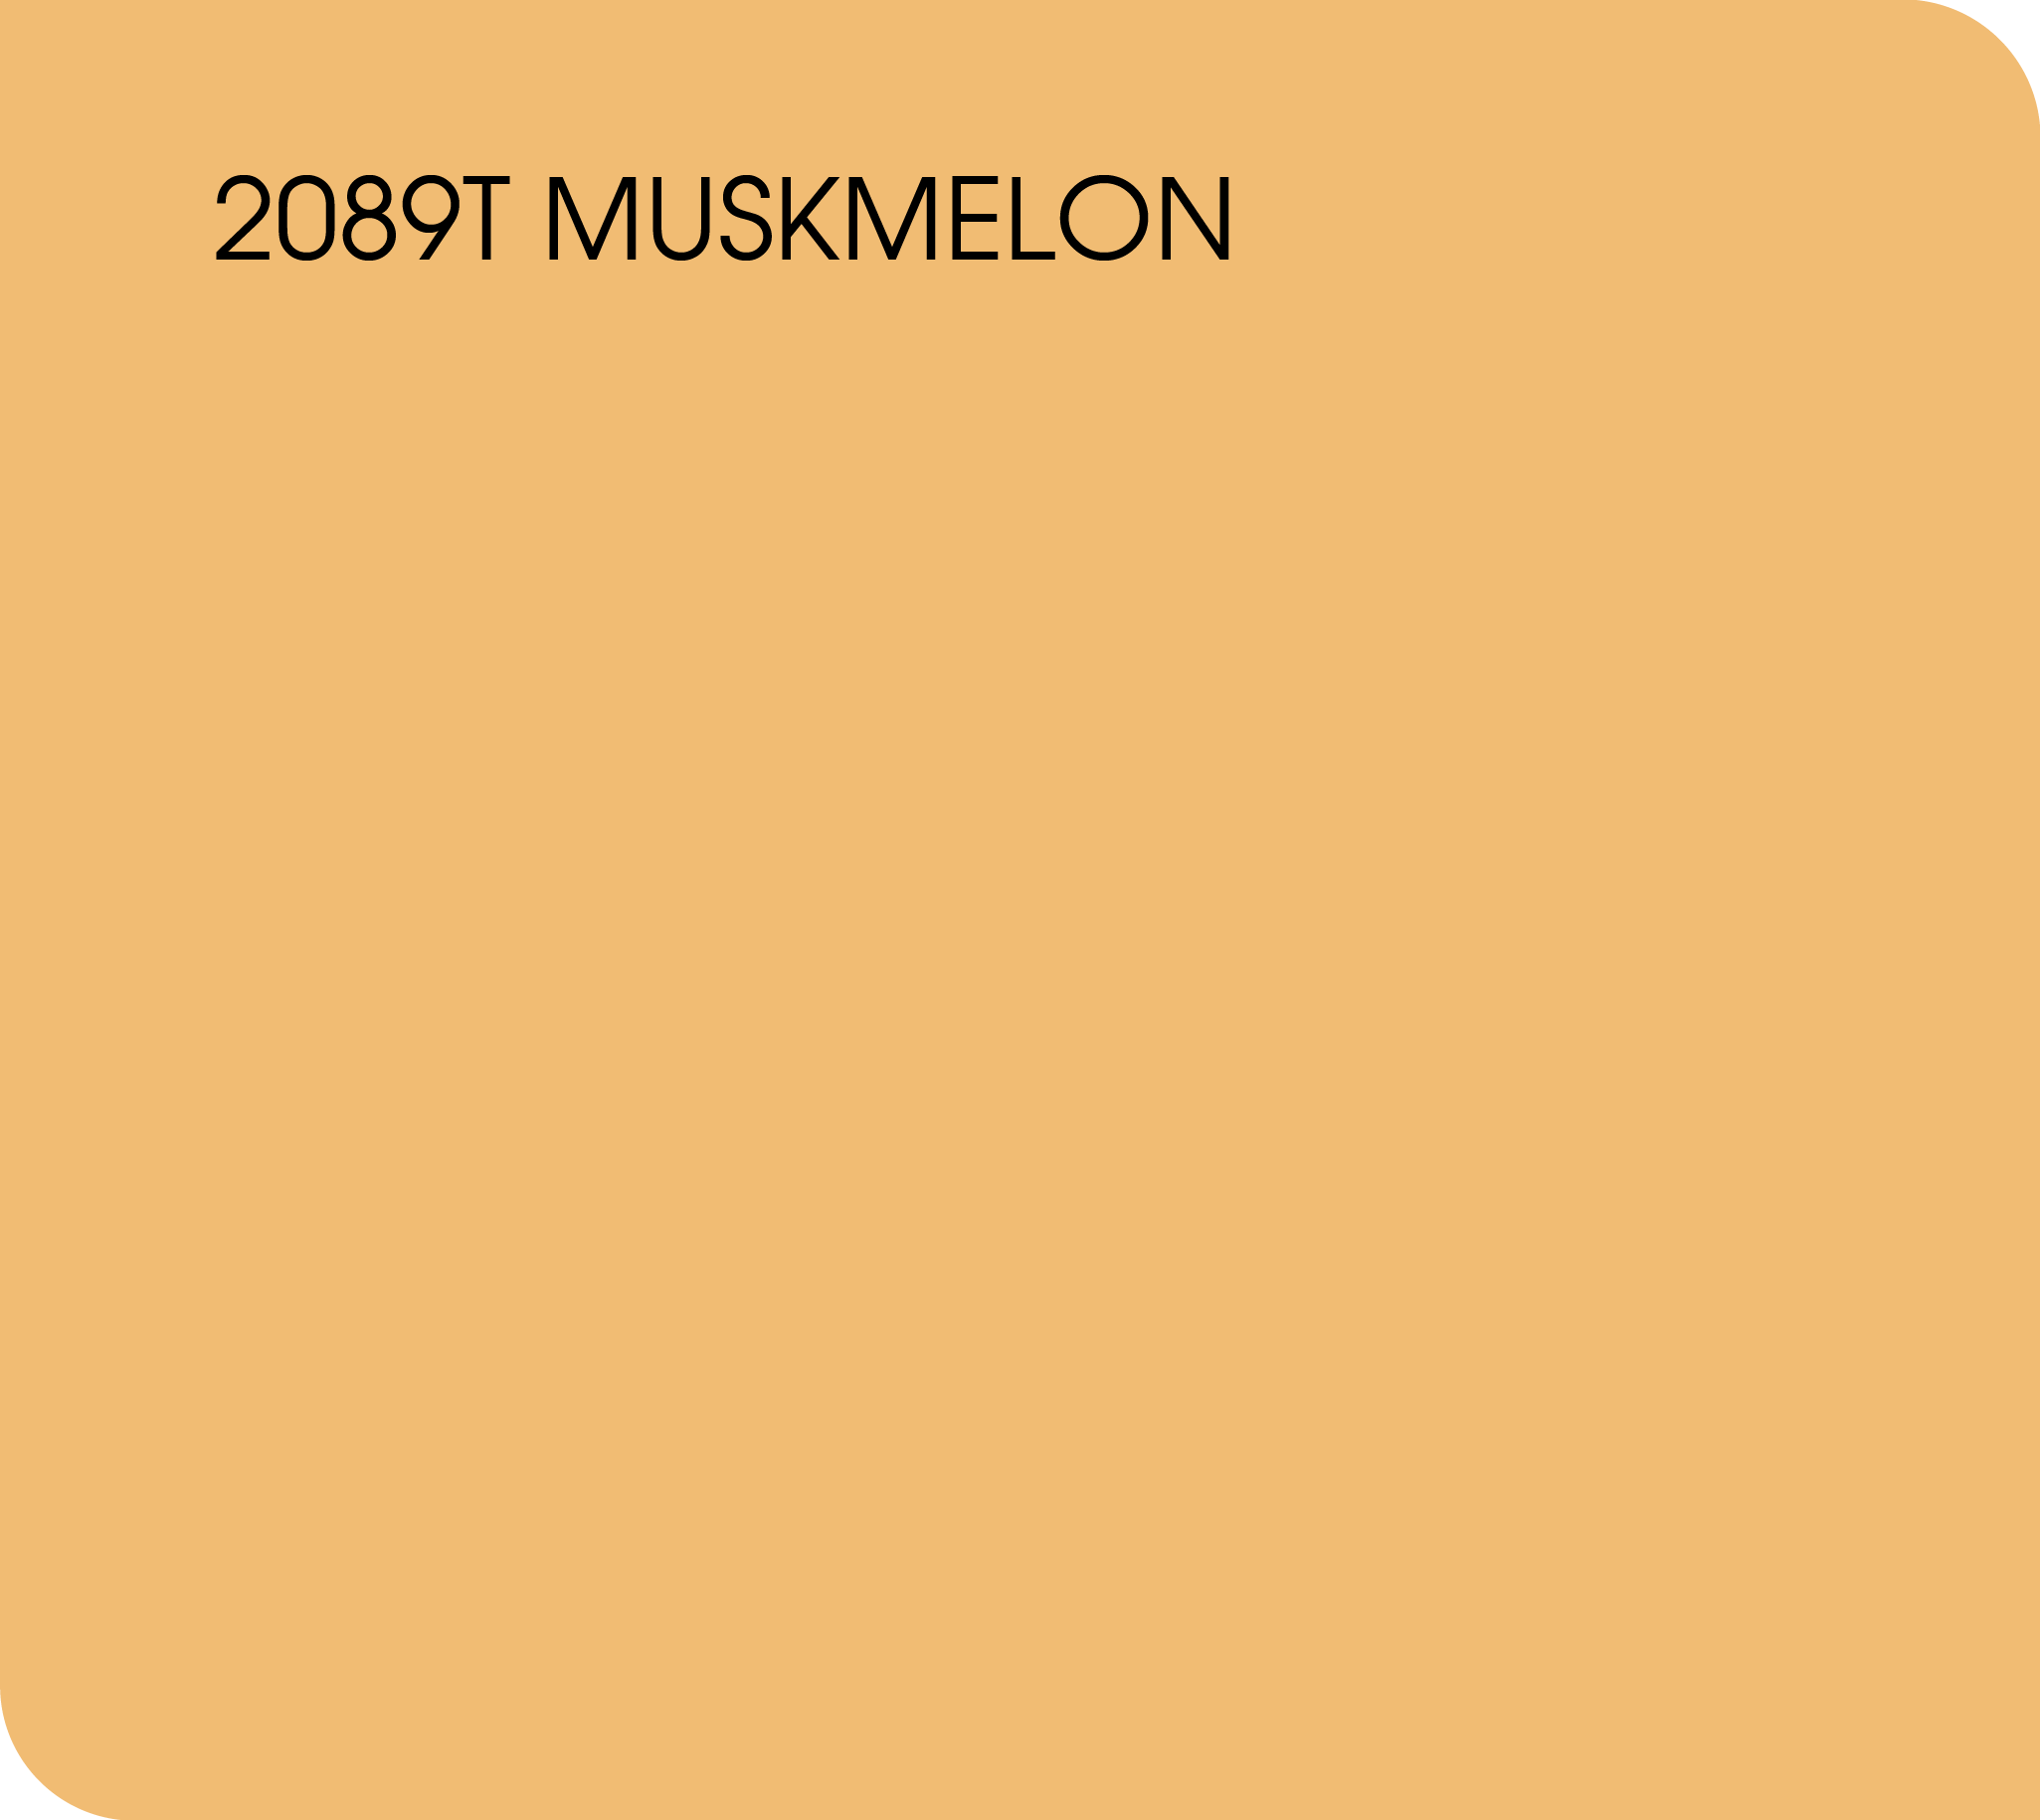 muskmelon 2089T